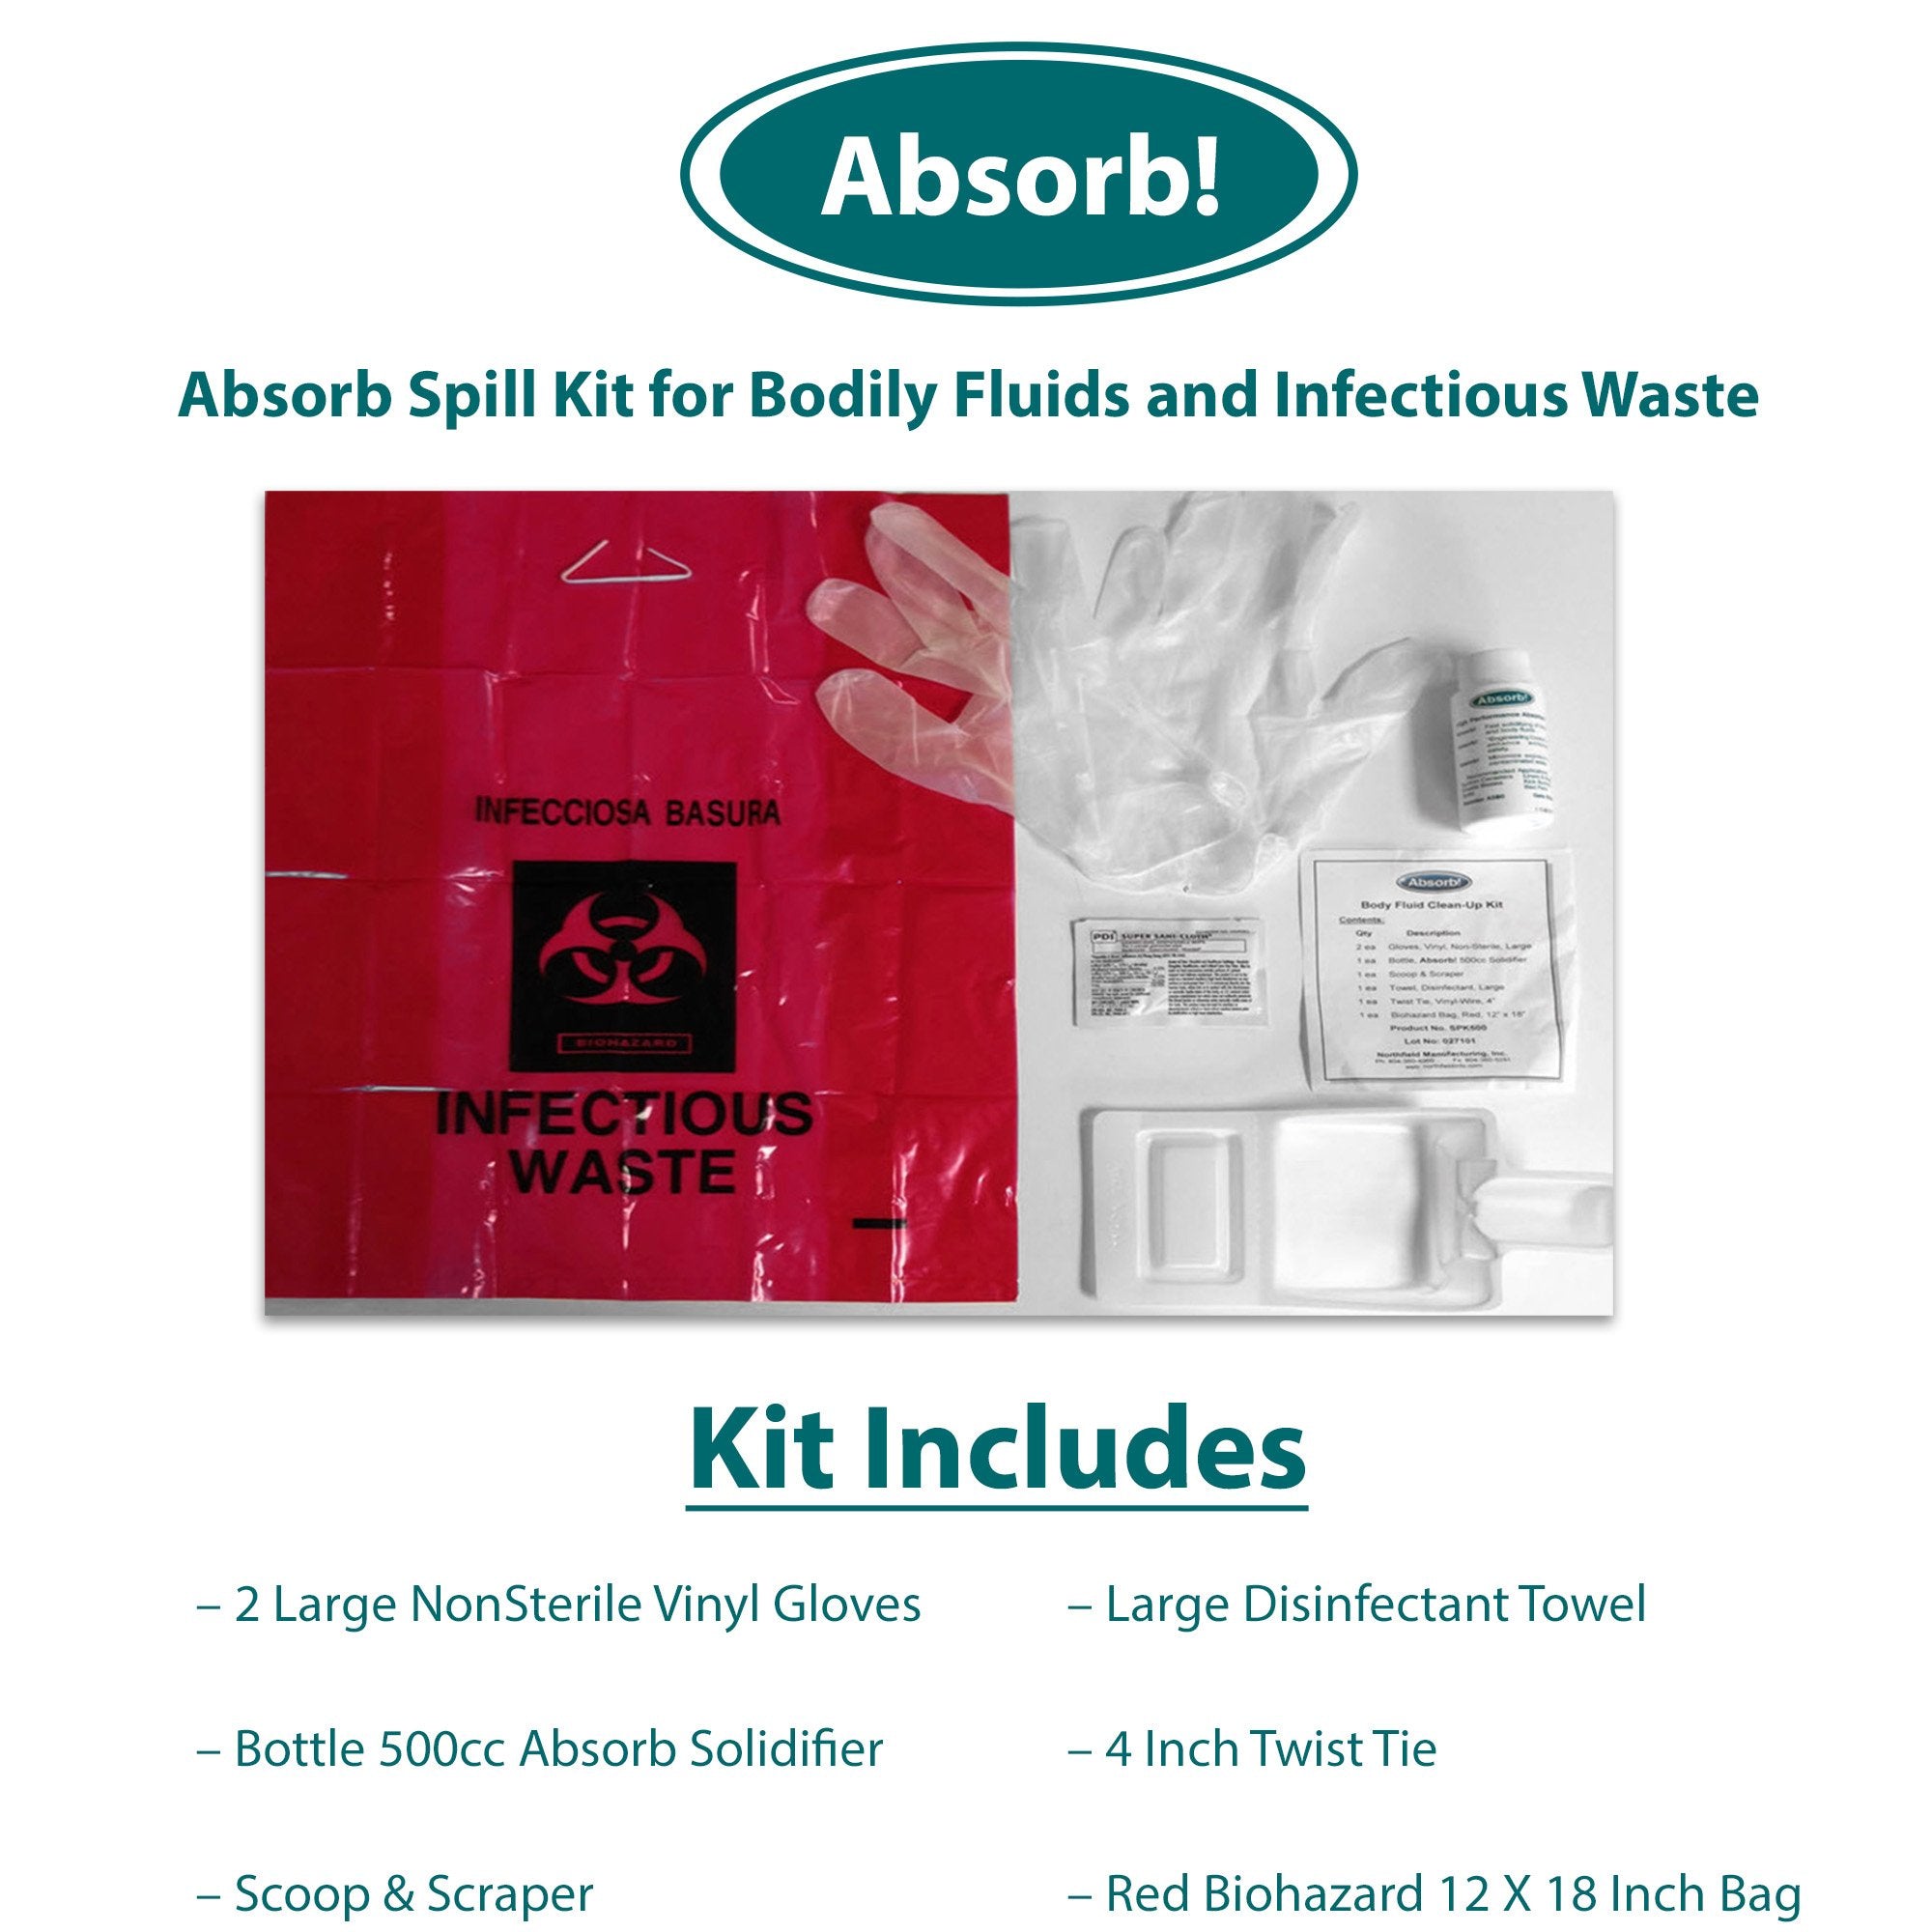 Spill Kit Absorb!